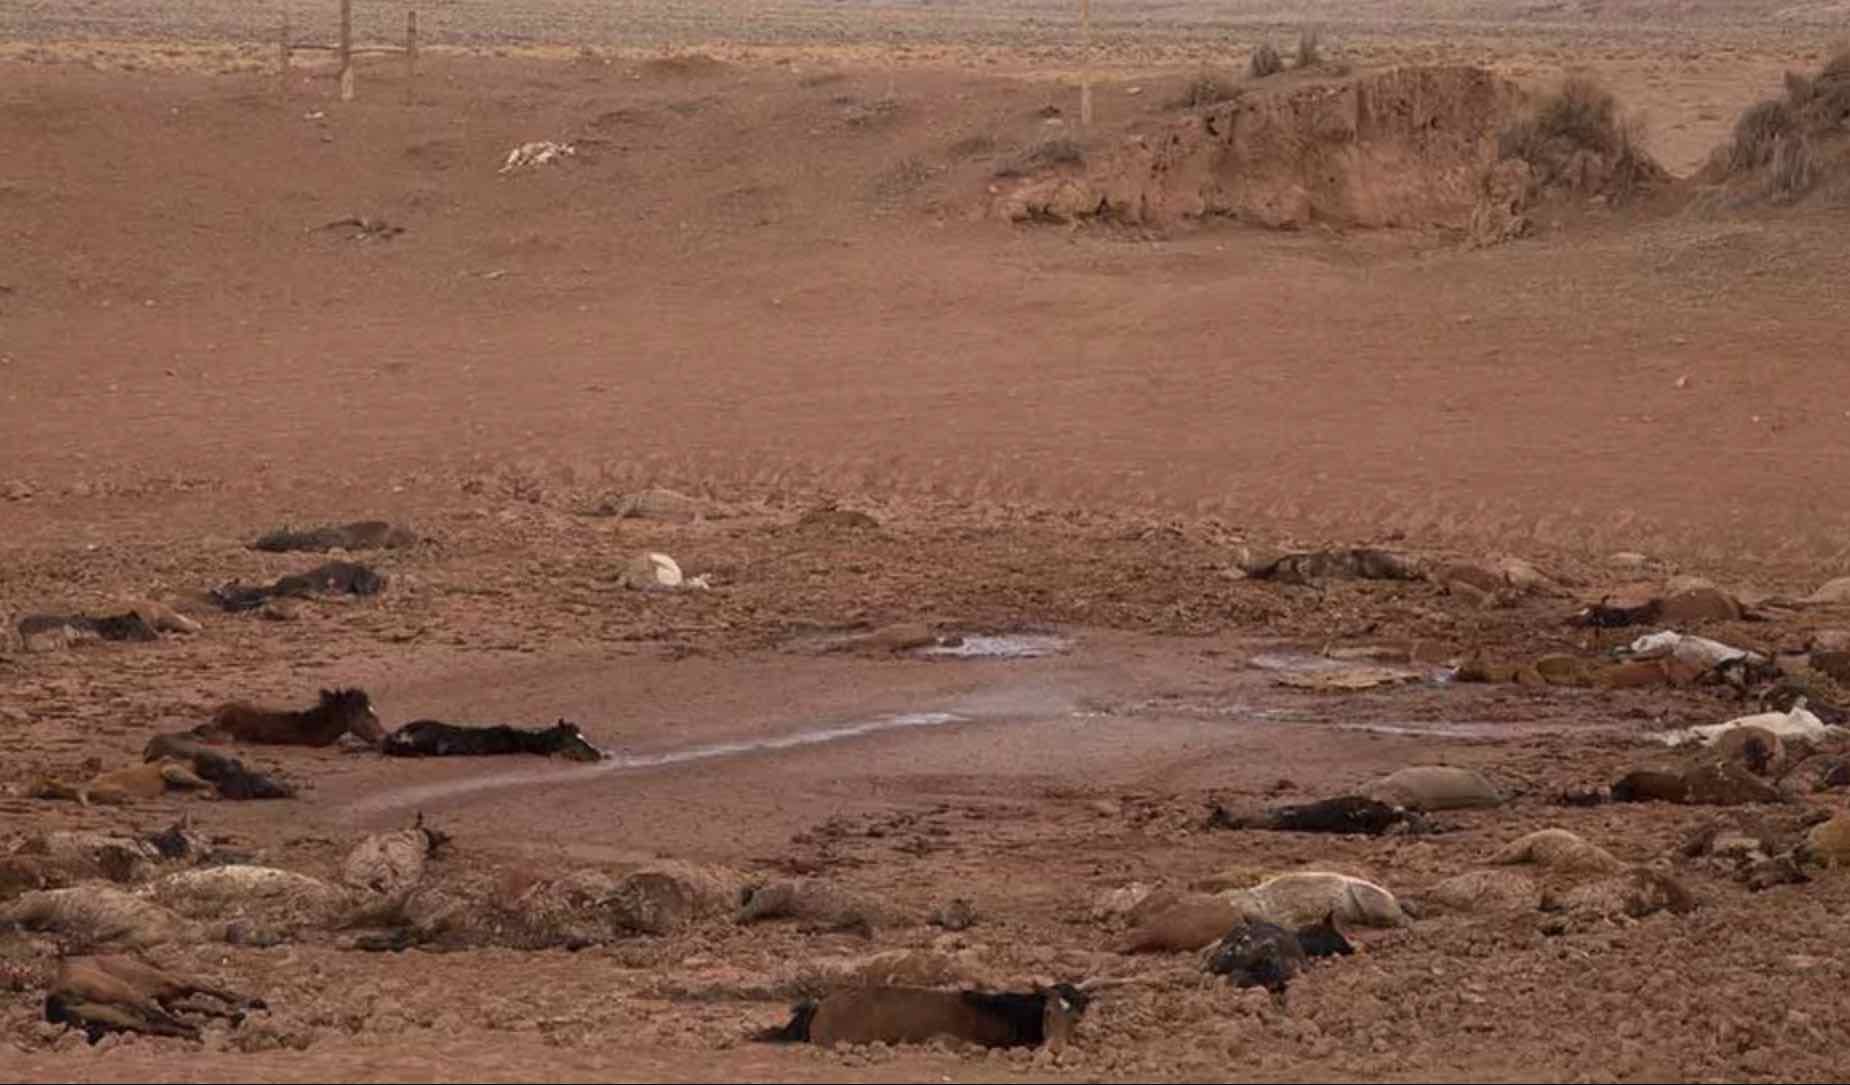 200 dead horses found on Navajo land in USA, Arizona (Photo)